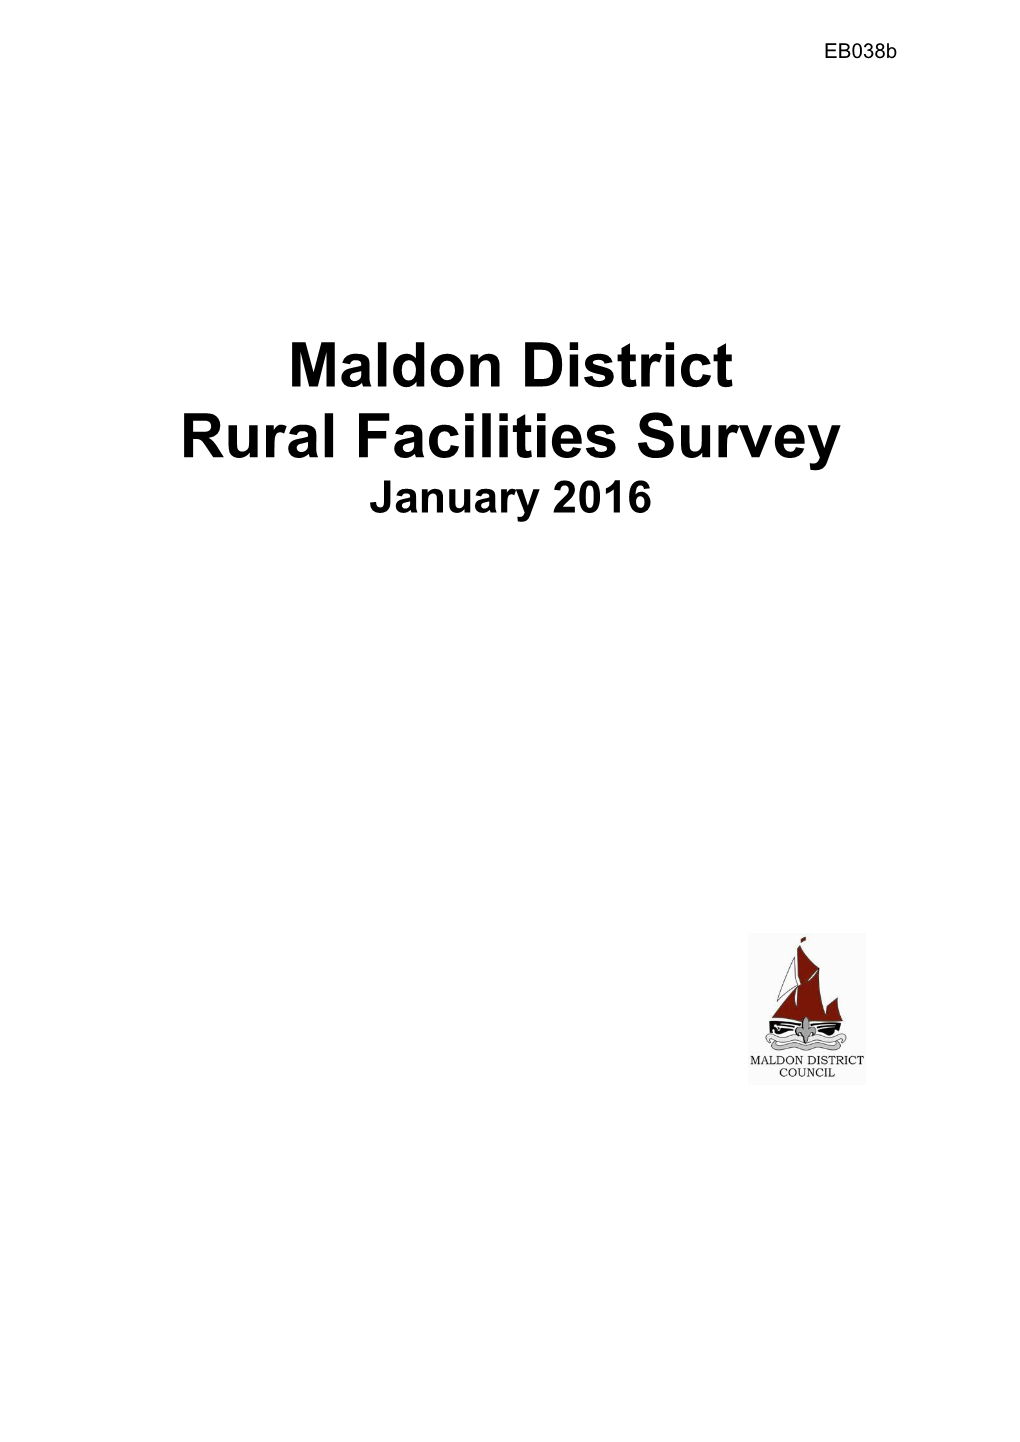 Eb038b Maldon District Rural Facilities Survey